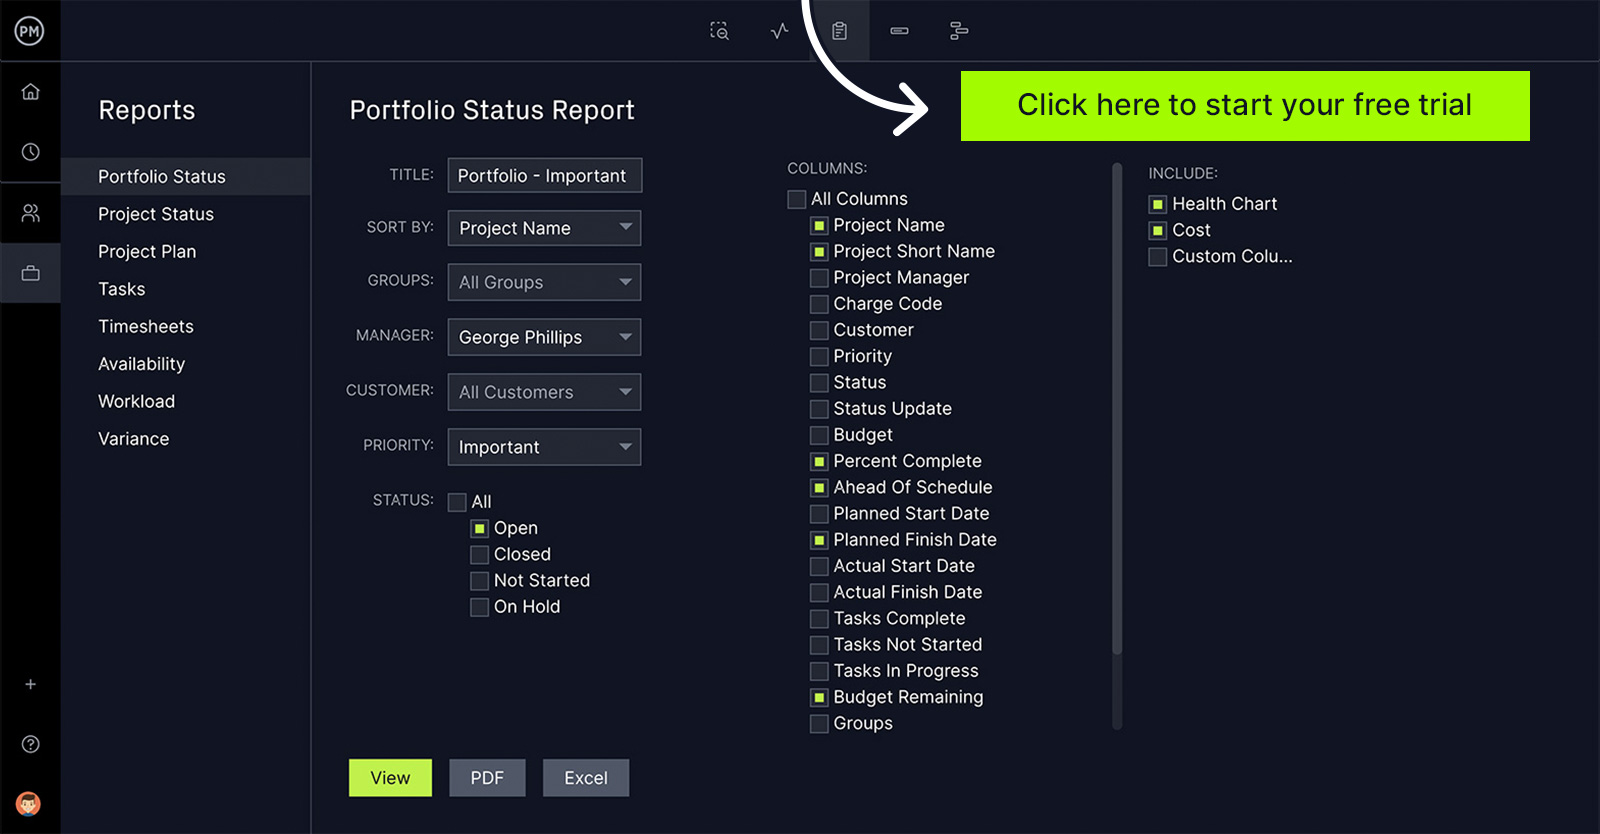 ProjectManager's portfolio status report filter